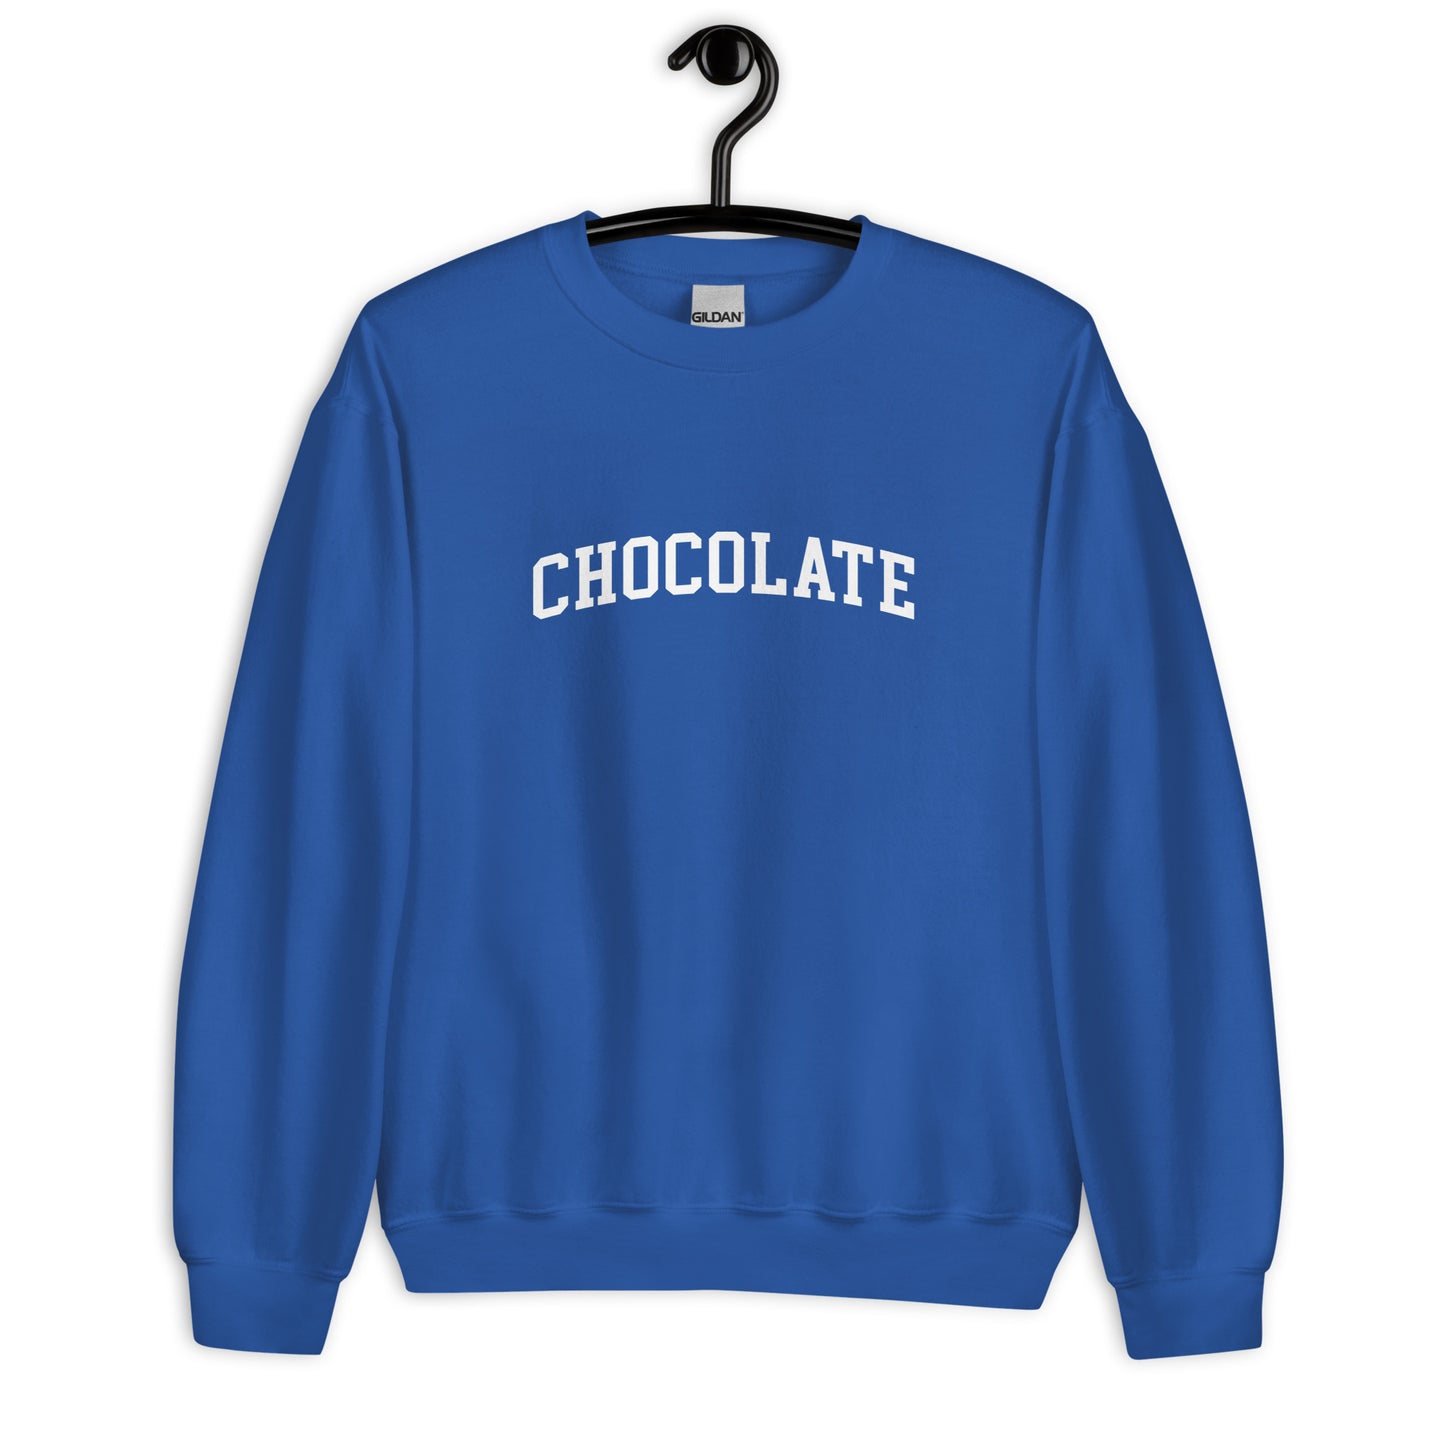 Chocolate Sweatshirt - Arched Font